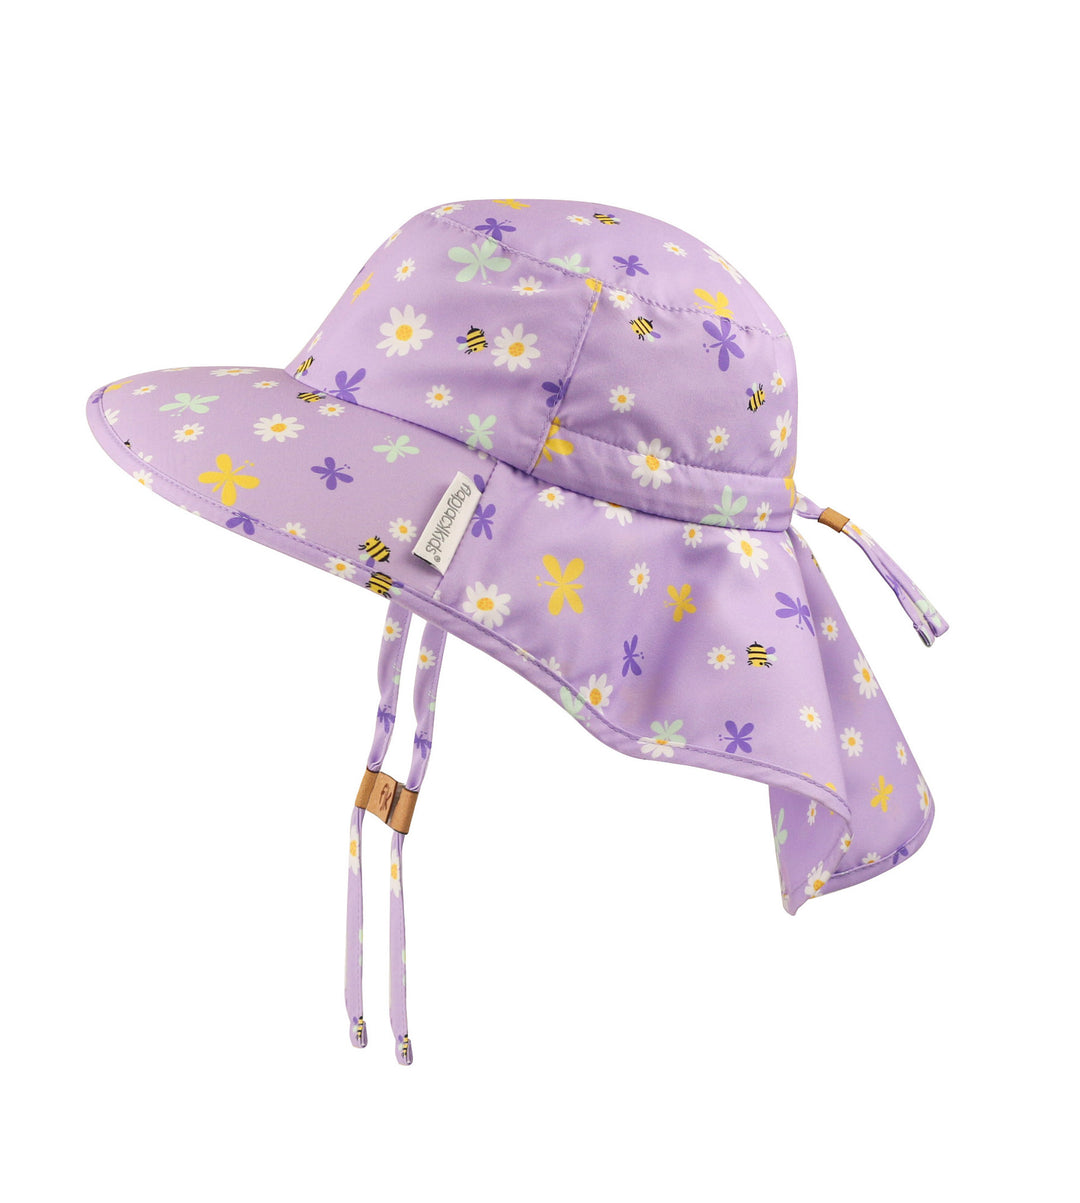 FlapJackKids - Sun Hat Neck Cape - Daisy -Small (6M-2Y) Sun Hat with Neck Cape - Daisy 873874009901